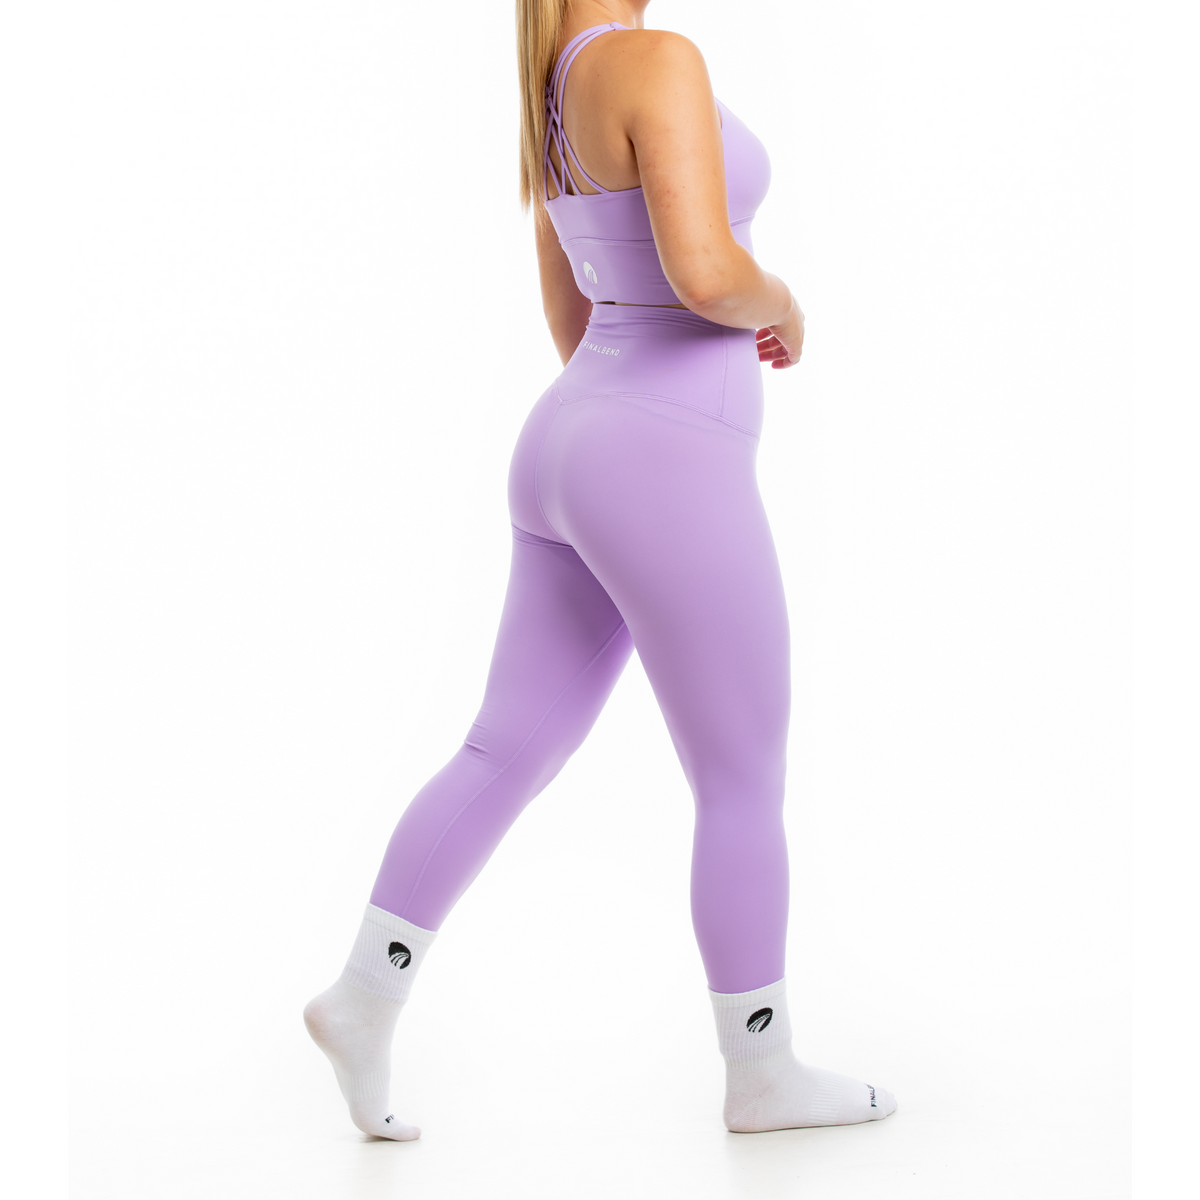 Champion C9 Strappy Mesh Leggings yoga pants Purple Size XS - $12 - From  Stephanie